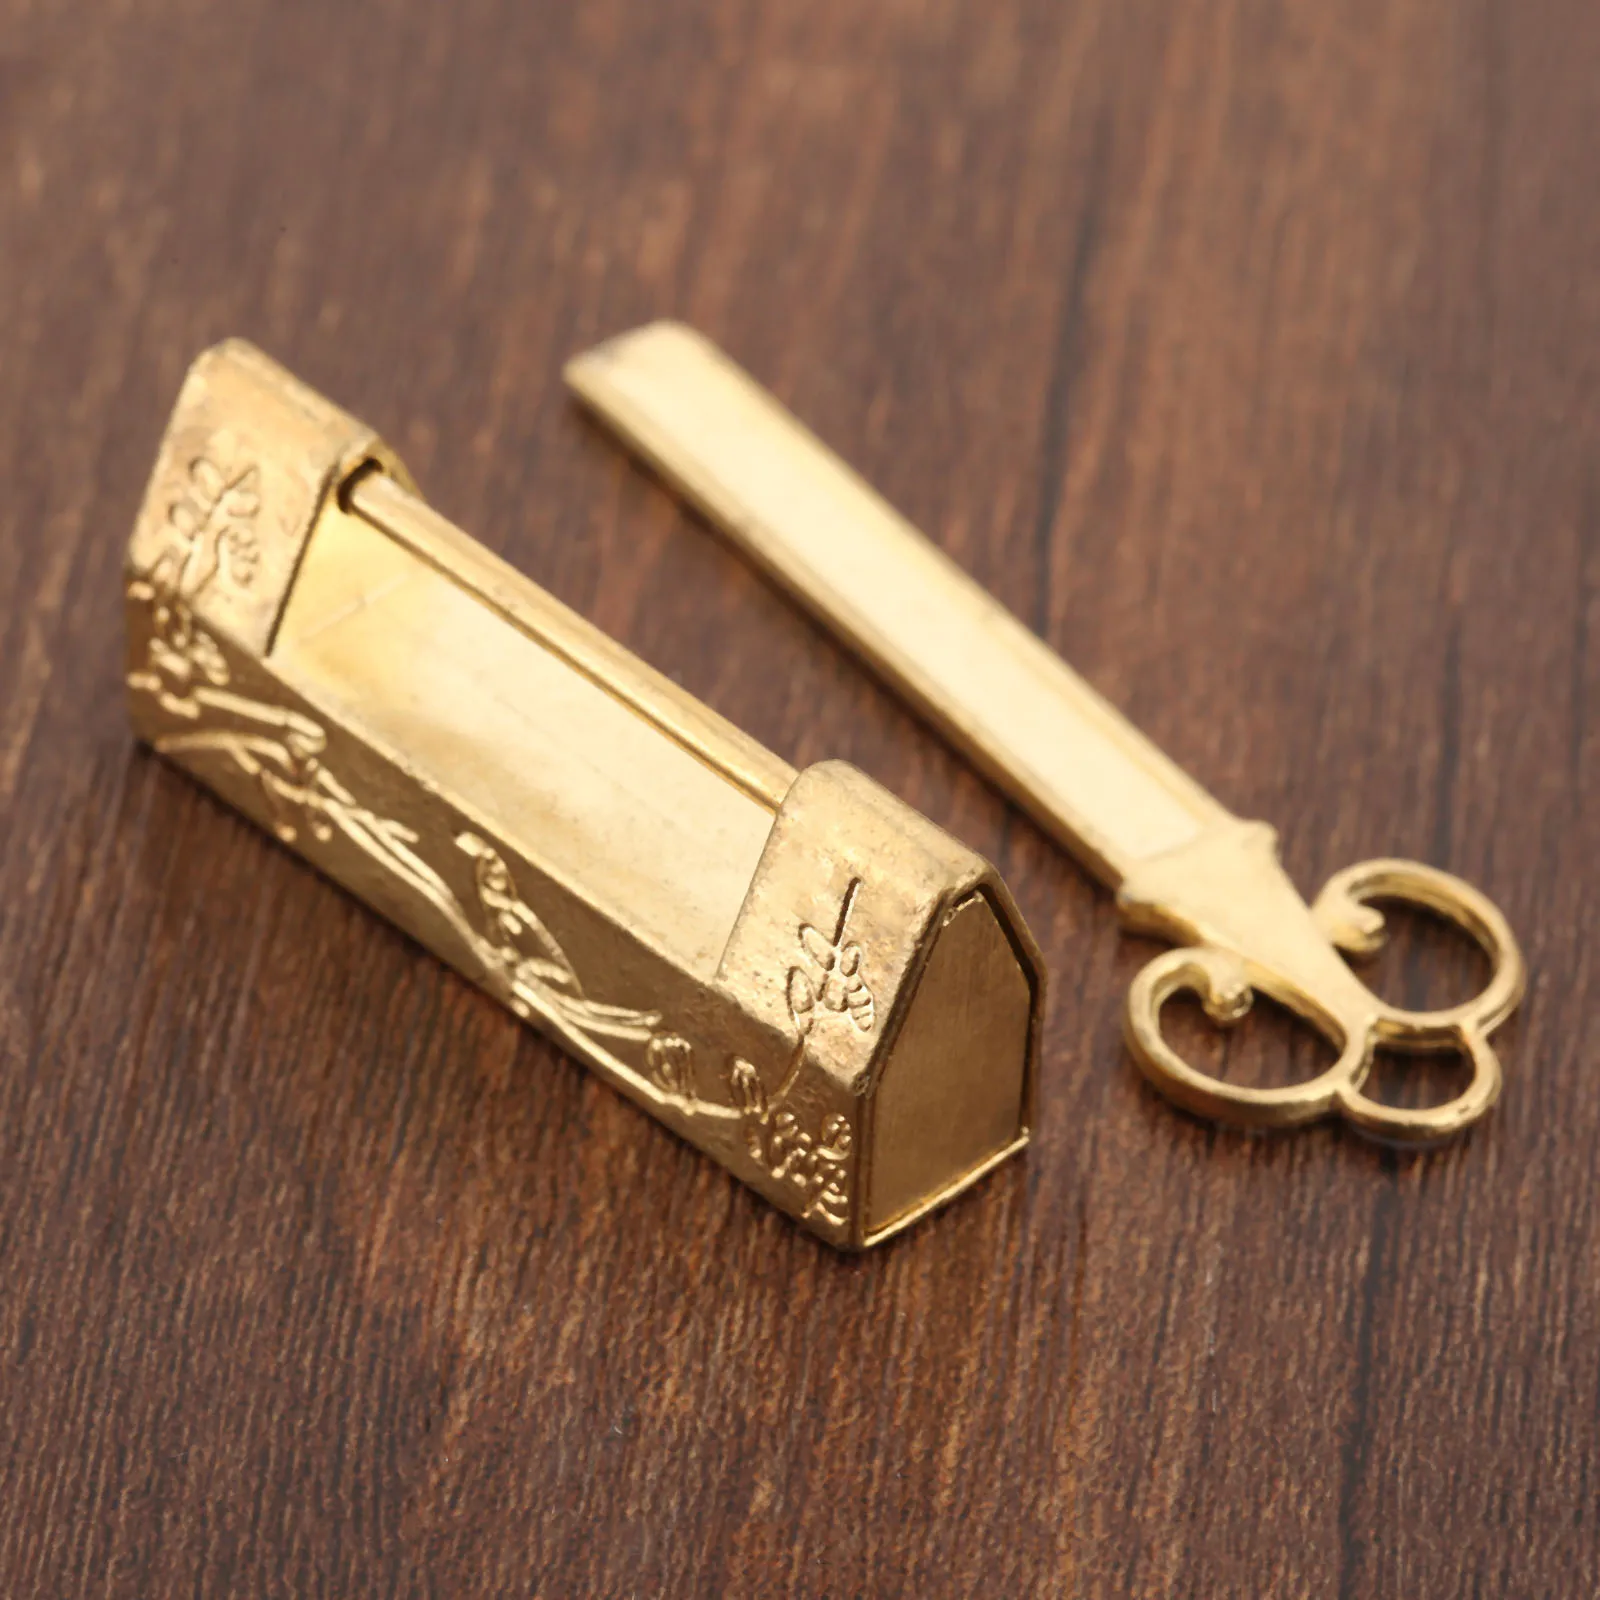 

Vintage Gold Chinese Old Lock Retro Brass Padlock Antique Jewelry Wooden Box Padlock Lock Suitcase Door Hardware Locks